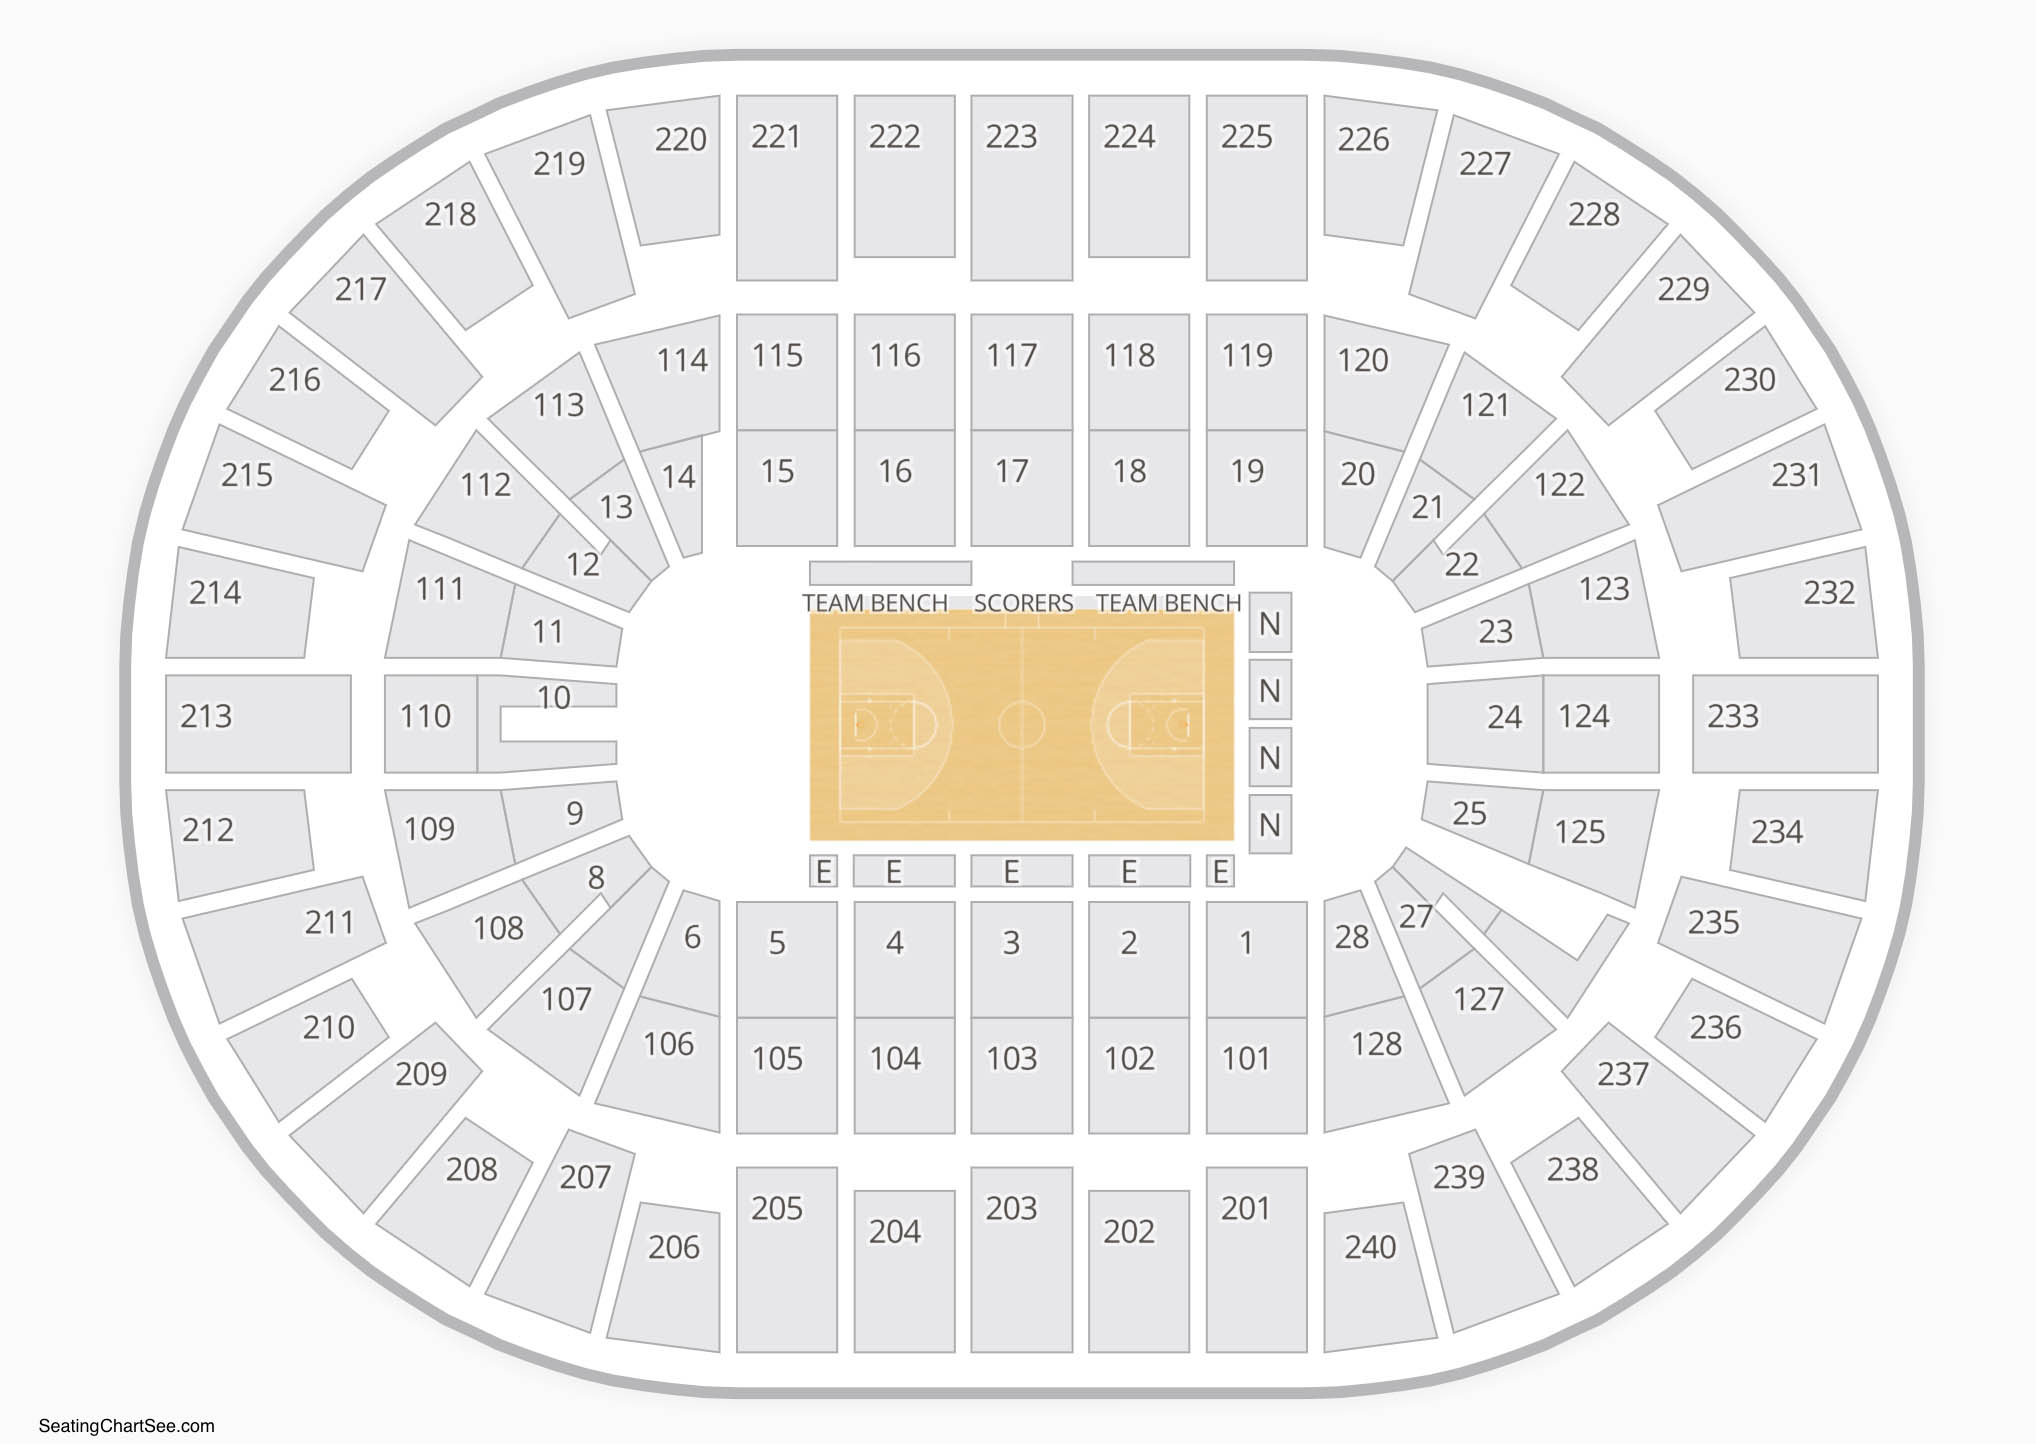 Nassau Coliseum Seating Charts Views